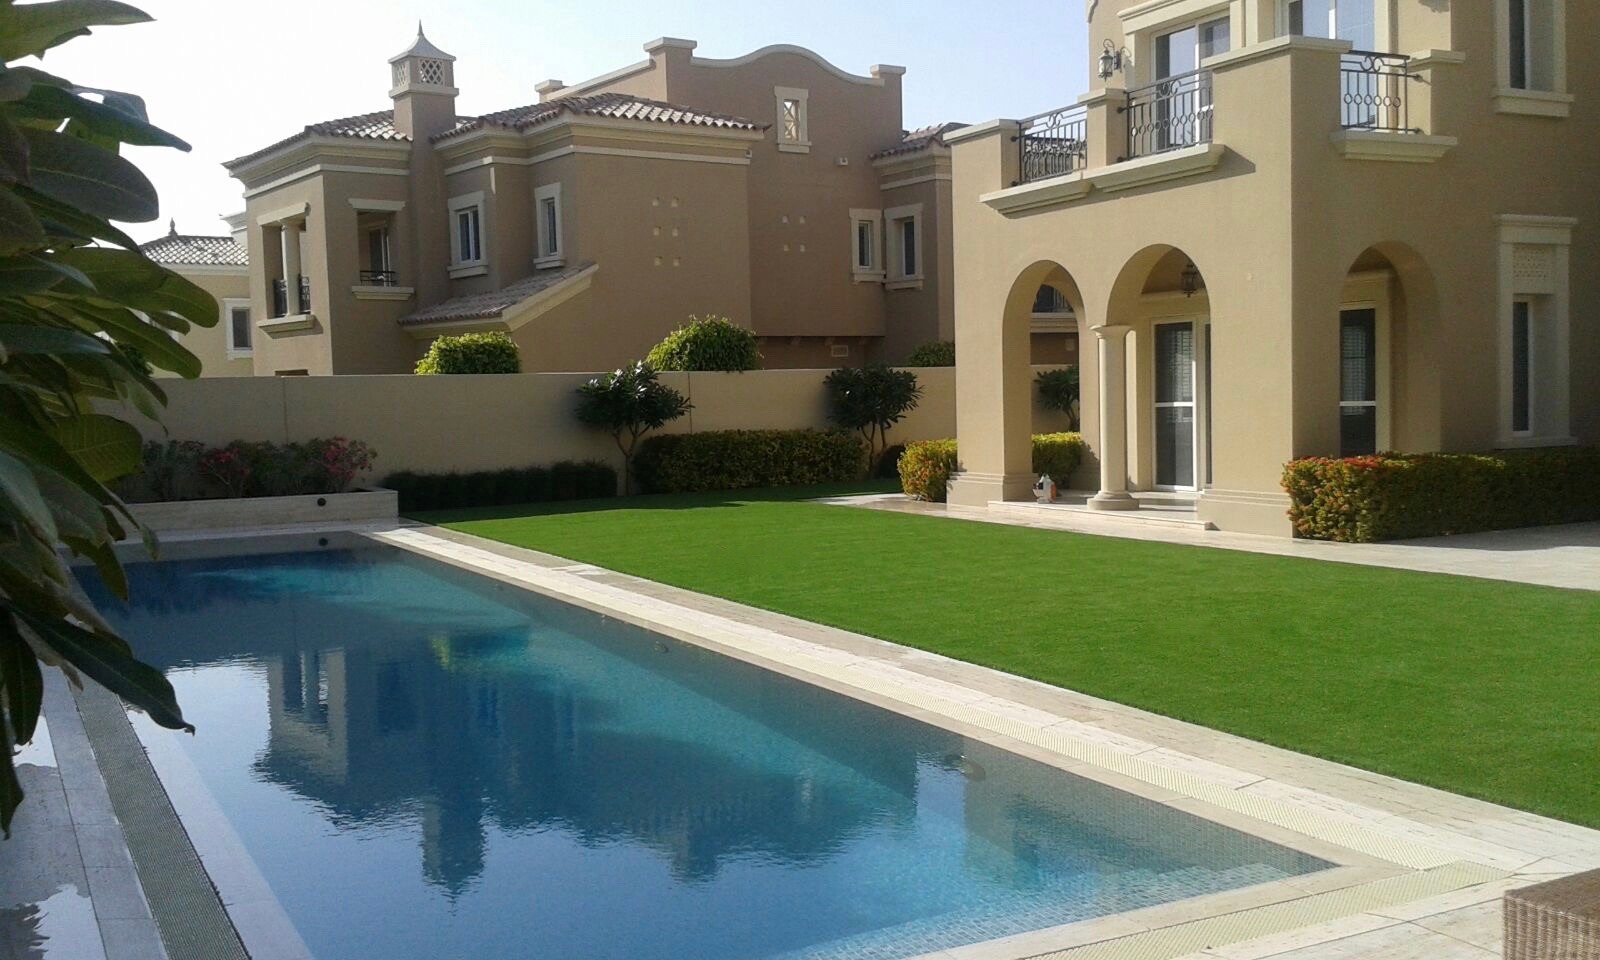 Private pool contractor UAE